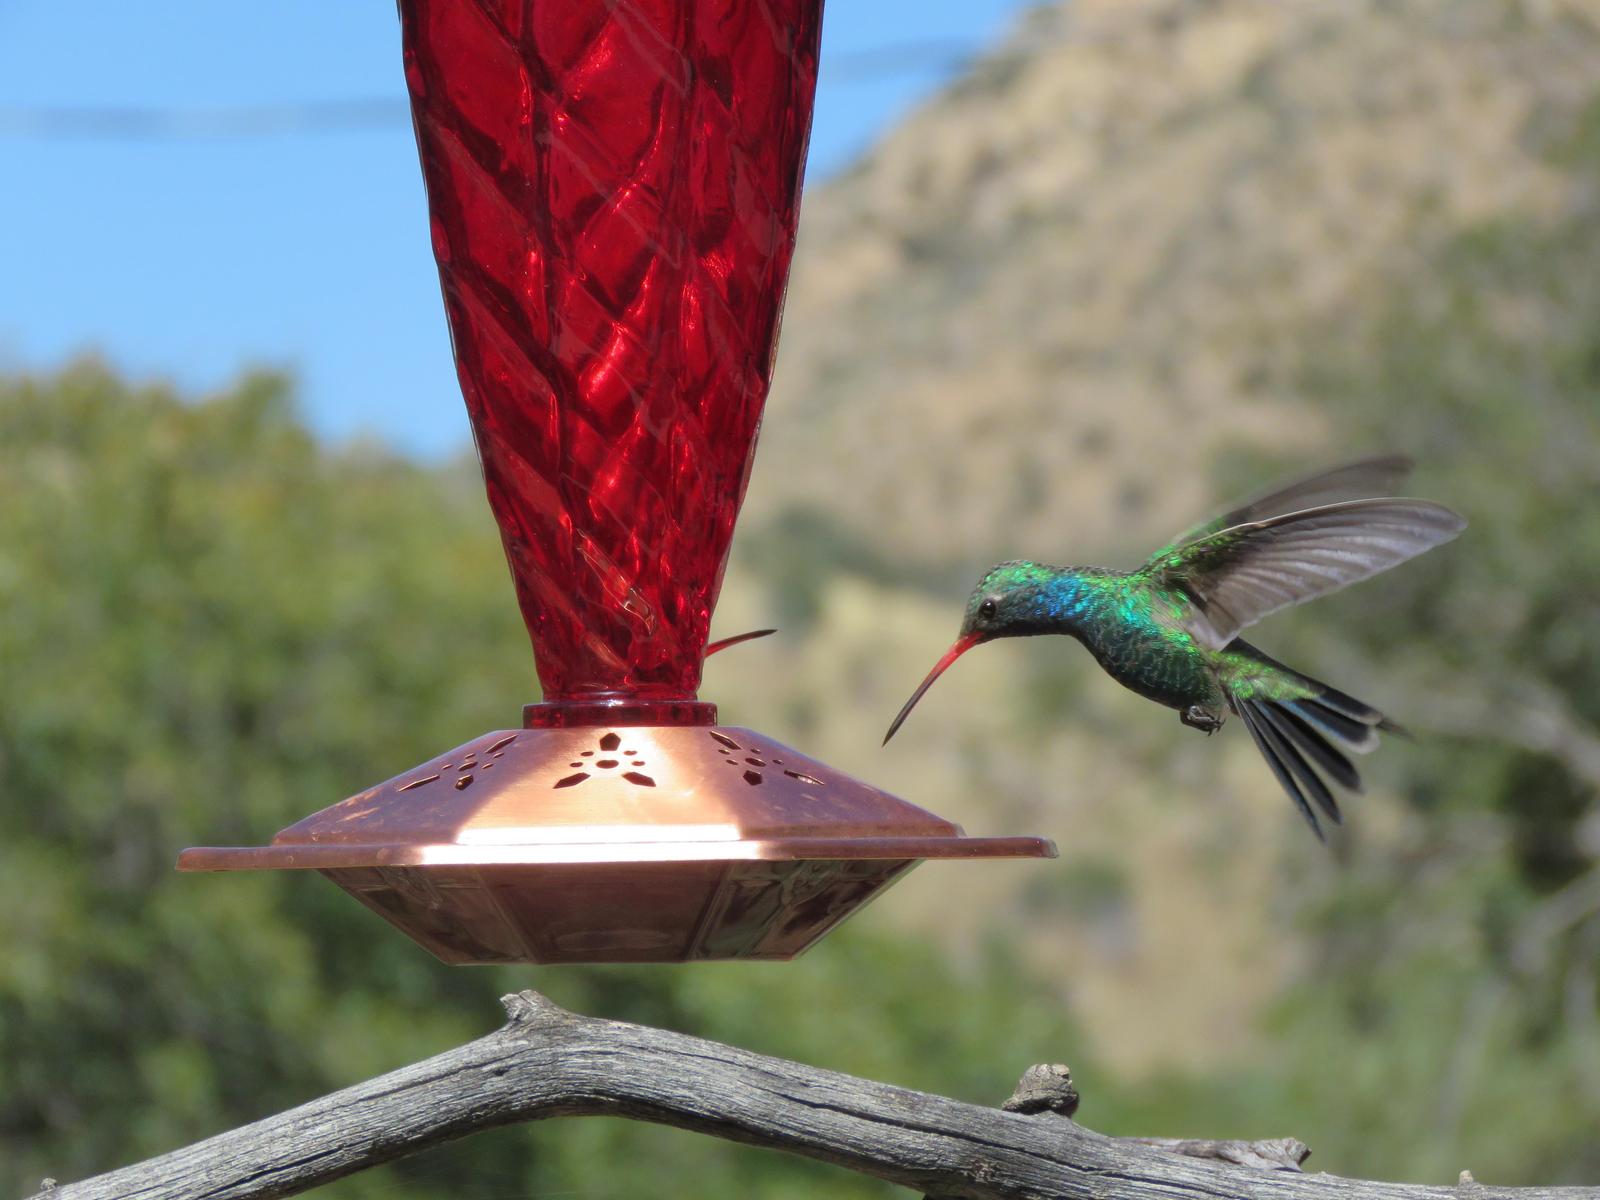 Broad-billed Hummingbird Photo by Nolan Keyes